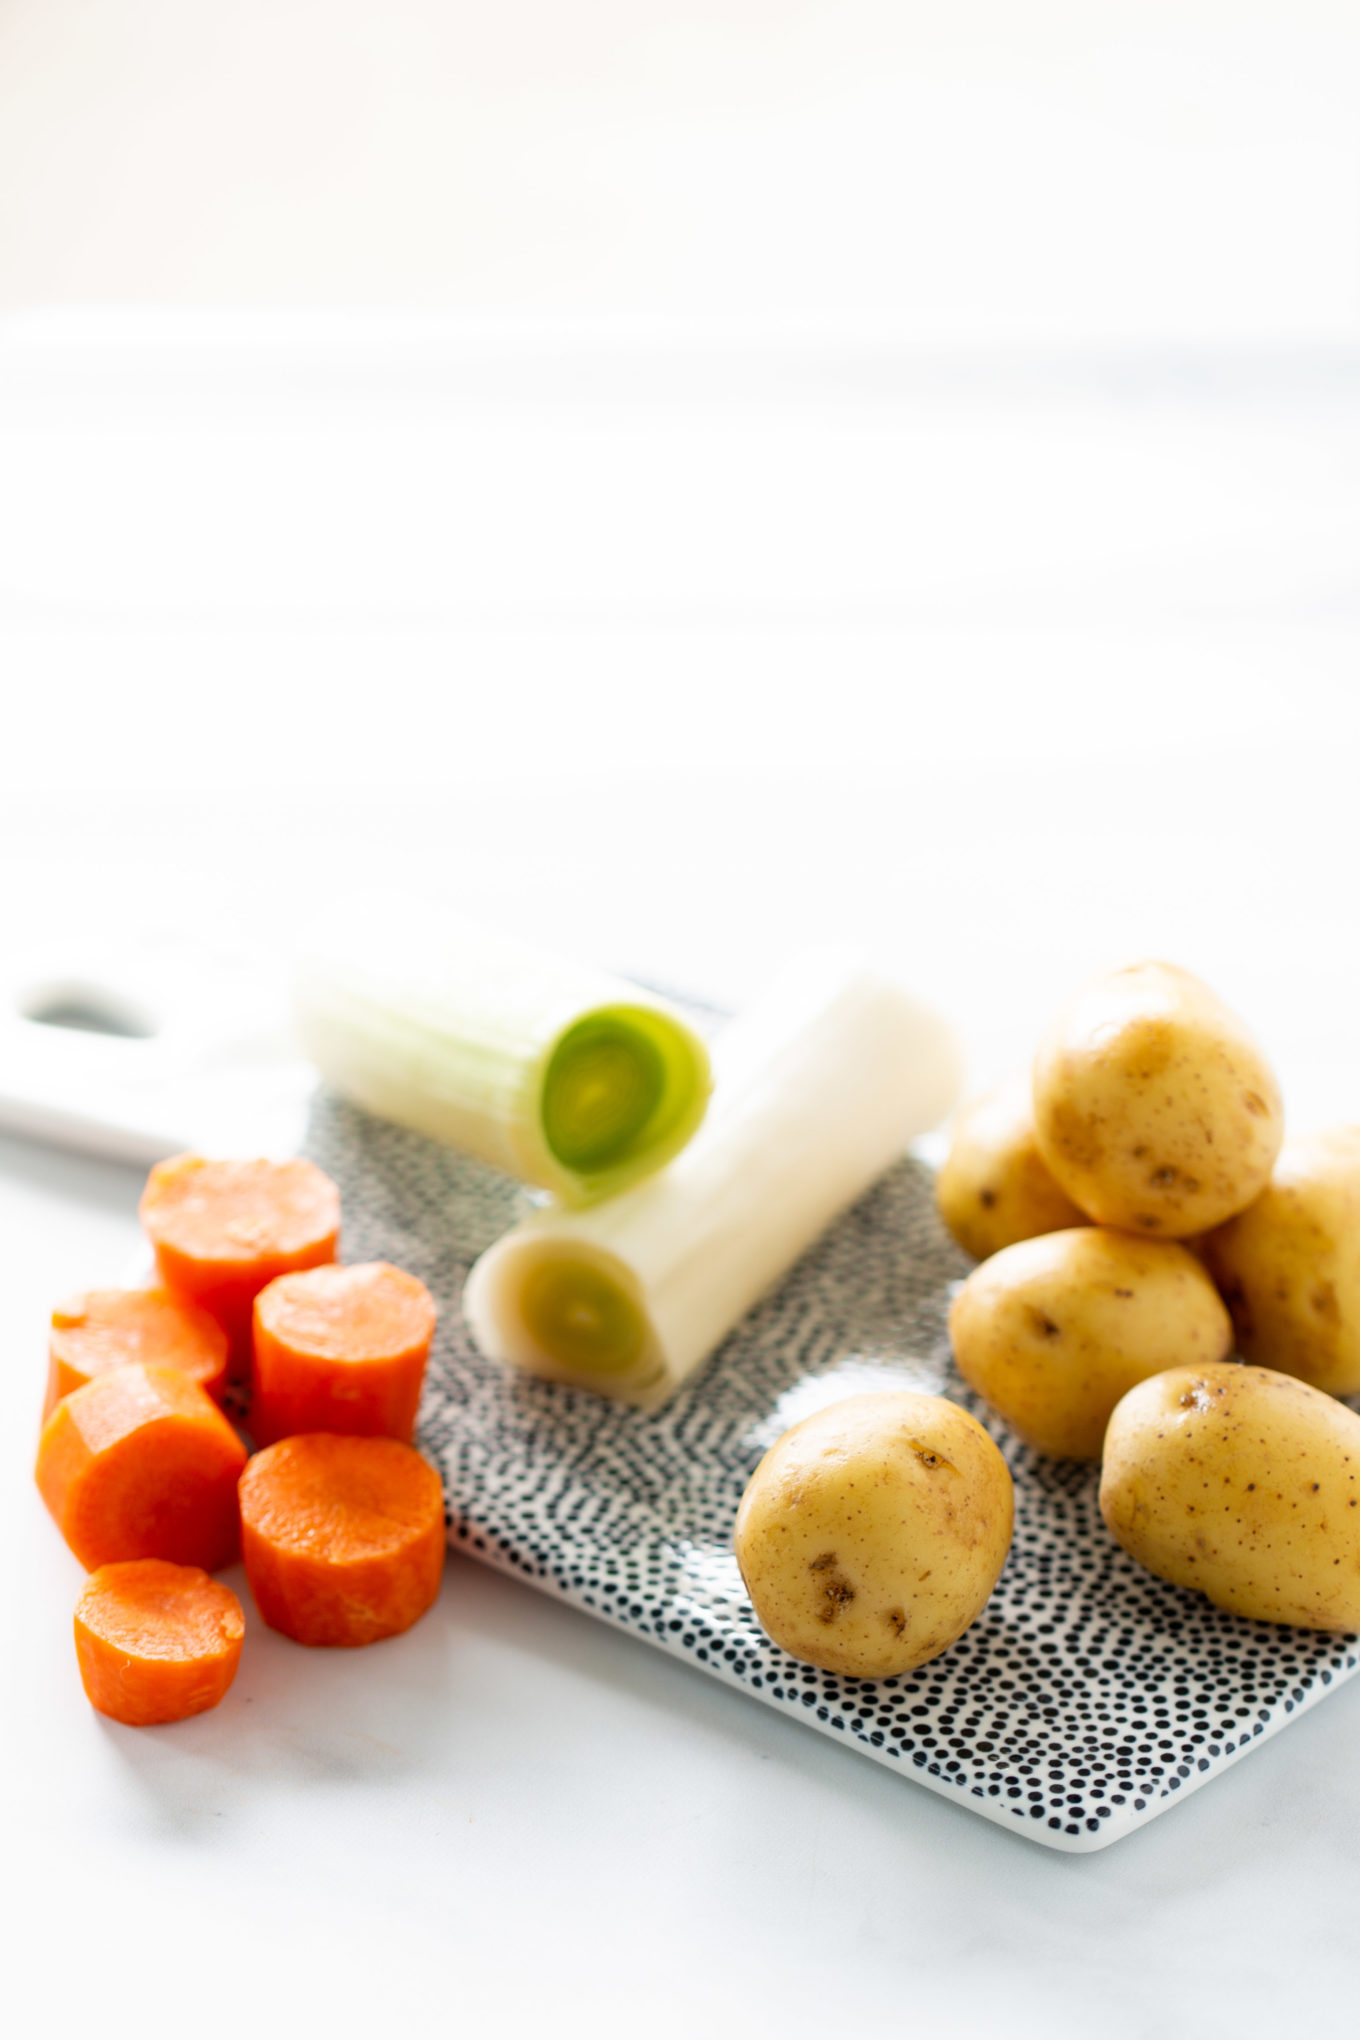 Potatoes, carrots and lek on a ceramic cutting board